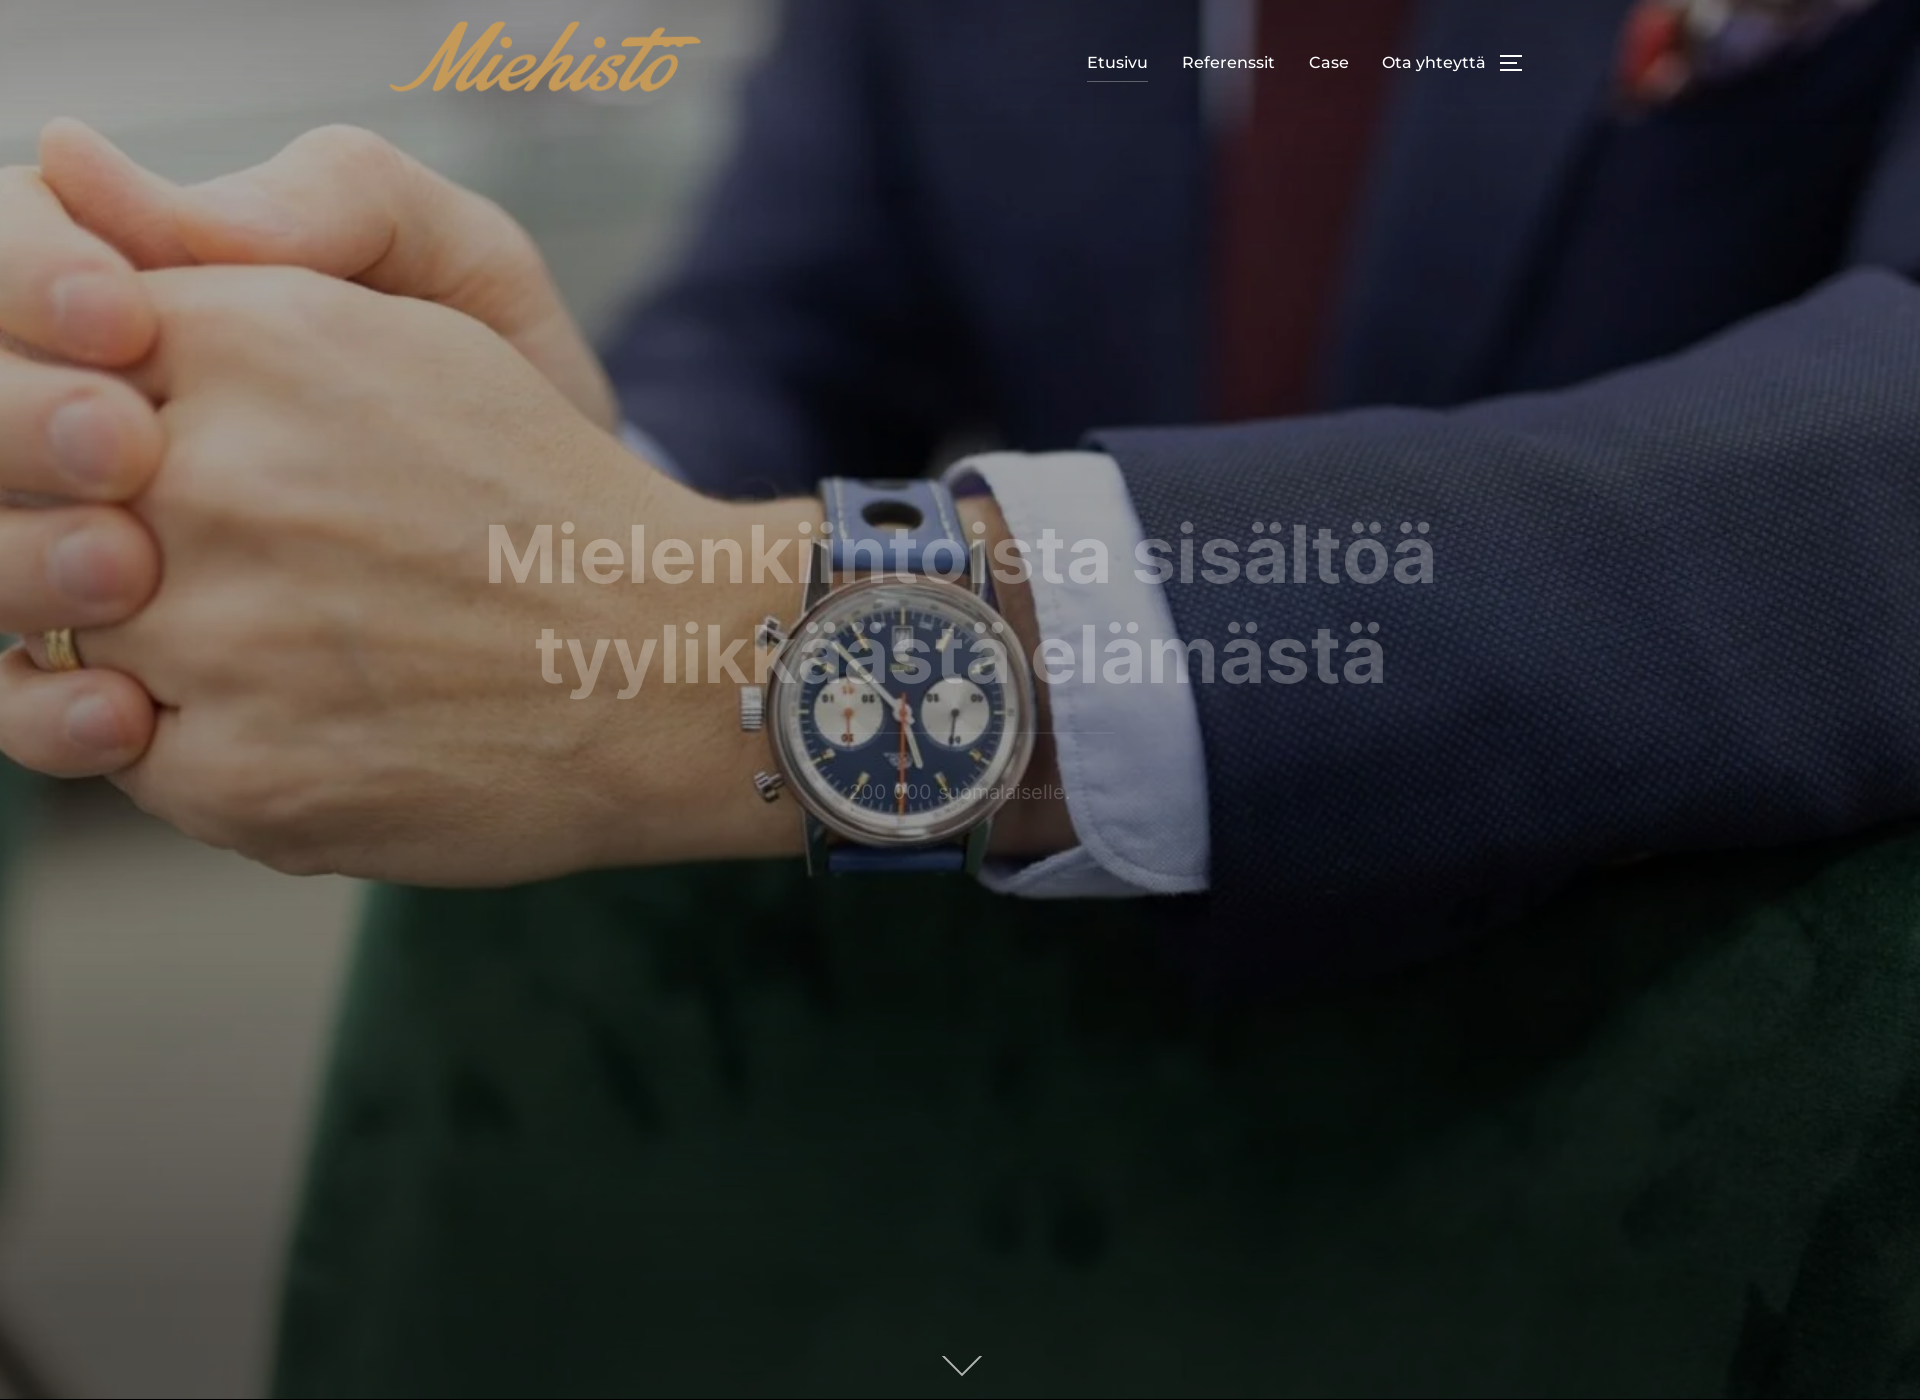 Screenshot for miehisto.fi